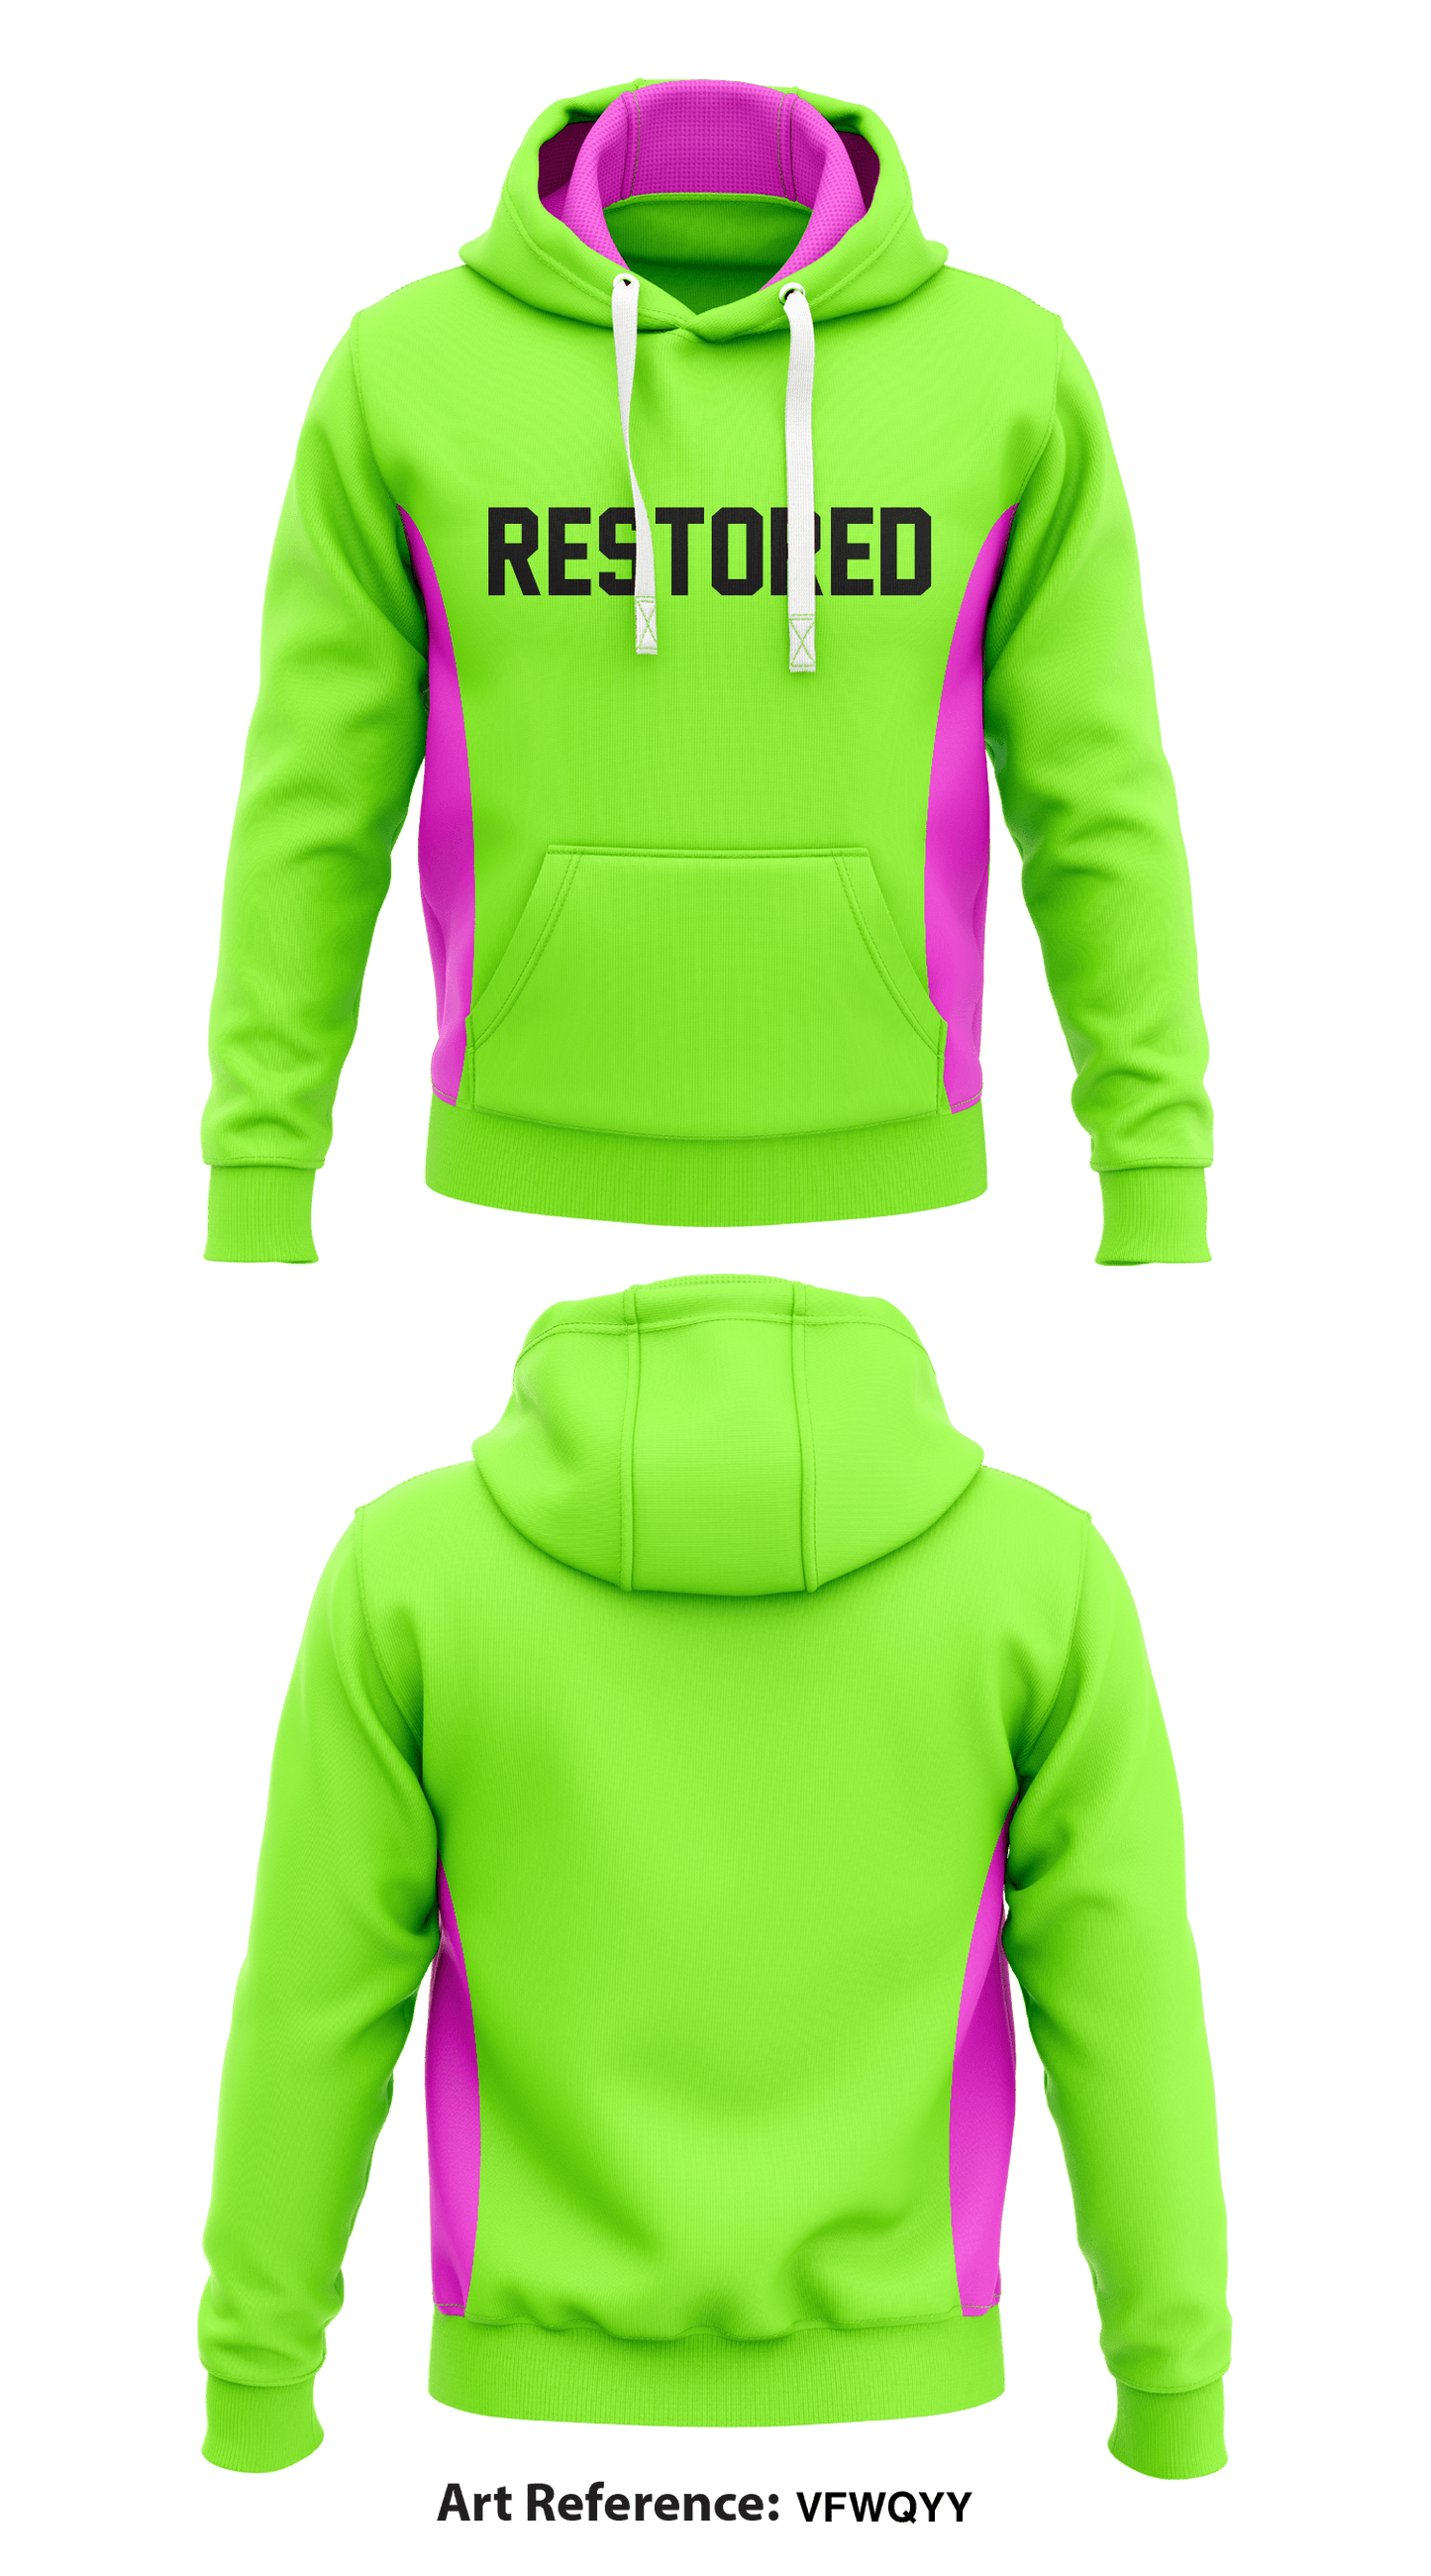 Restored Store 1  Core Men's Hooded Performance Sweatshirt - vfwQyy